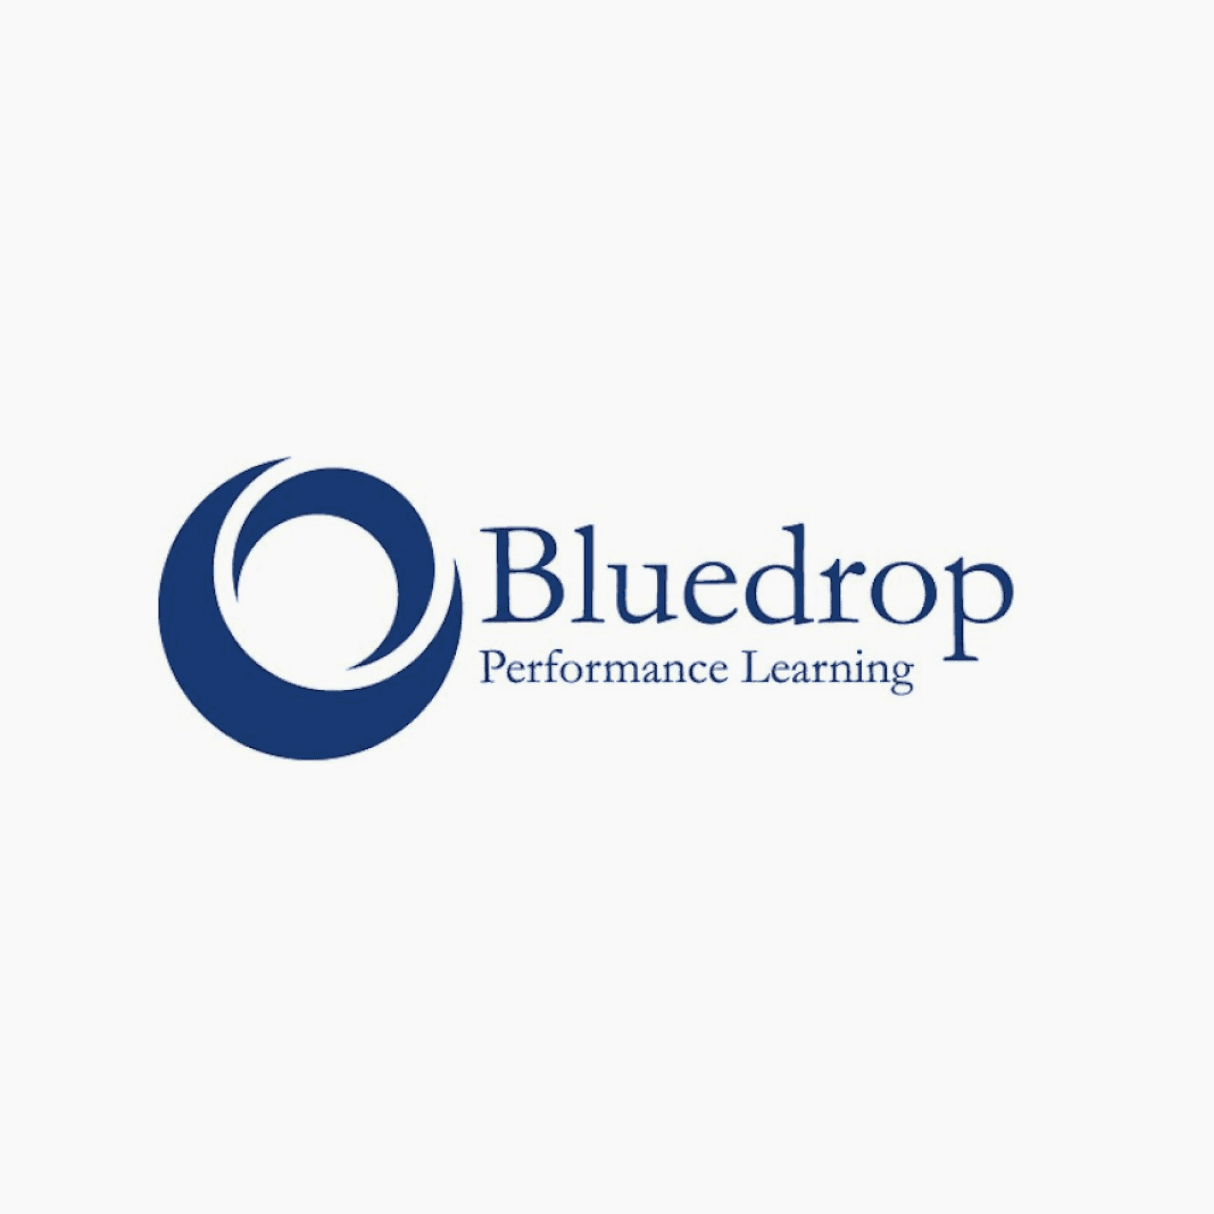 Bluedrop